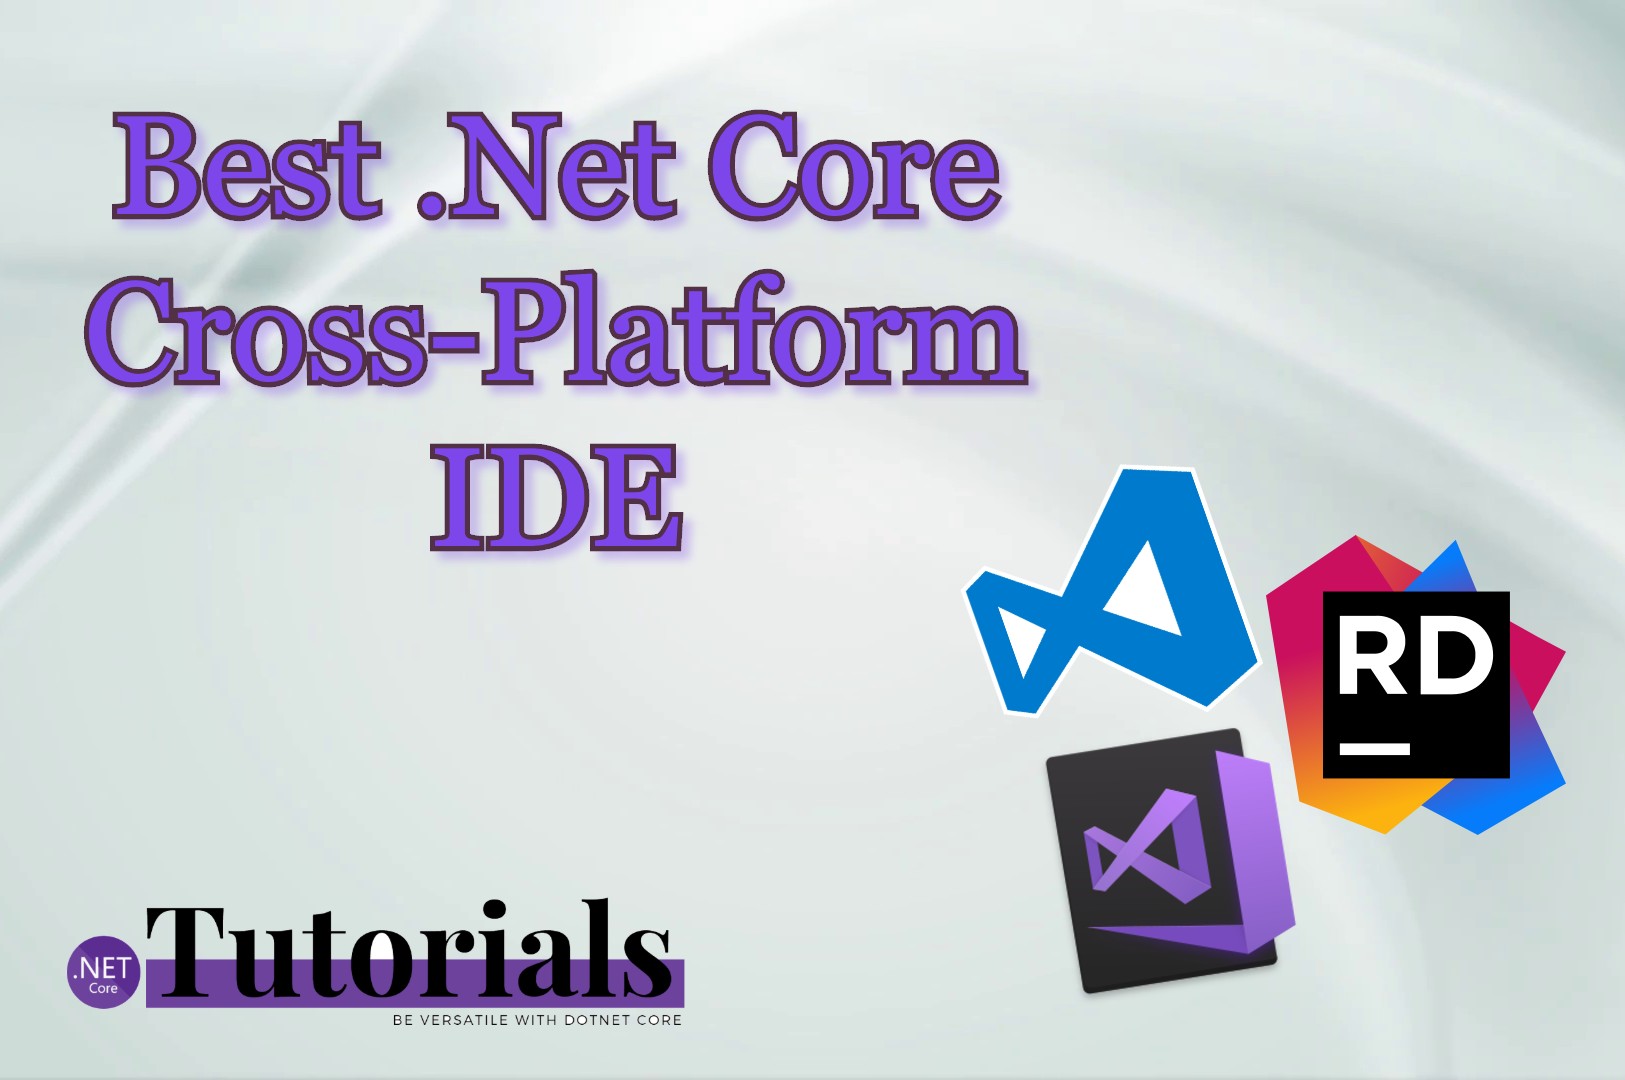 Cross-platform language for windows and macos development software